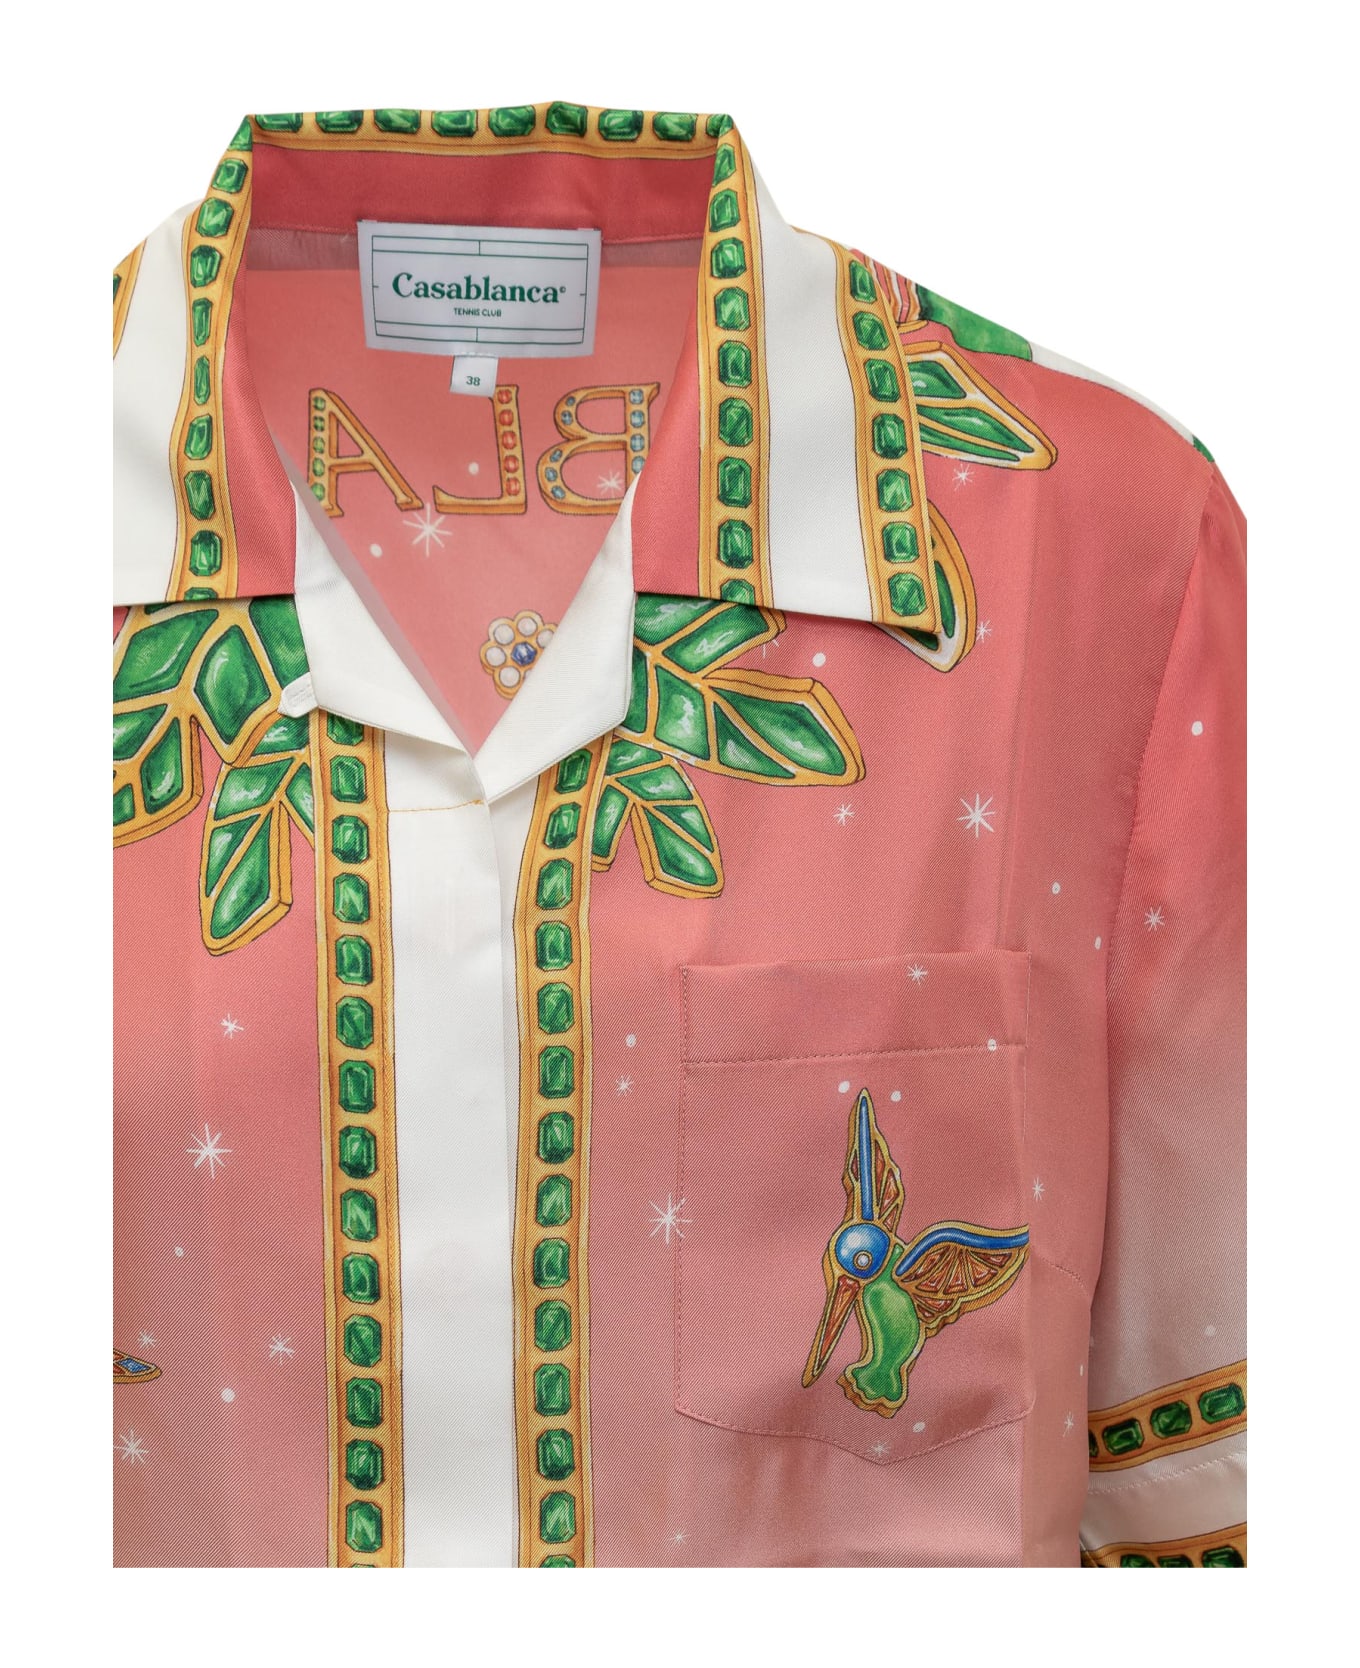 Casablanca Chemisier Dress With Lagos Tennis Club Print - JOYAUX DAFRIQUE PINK